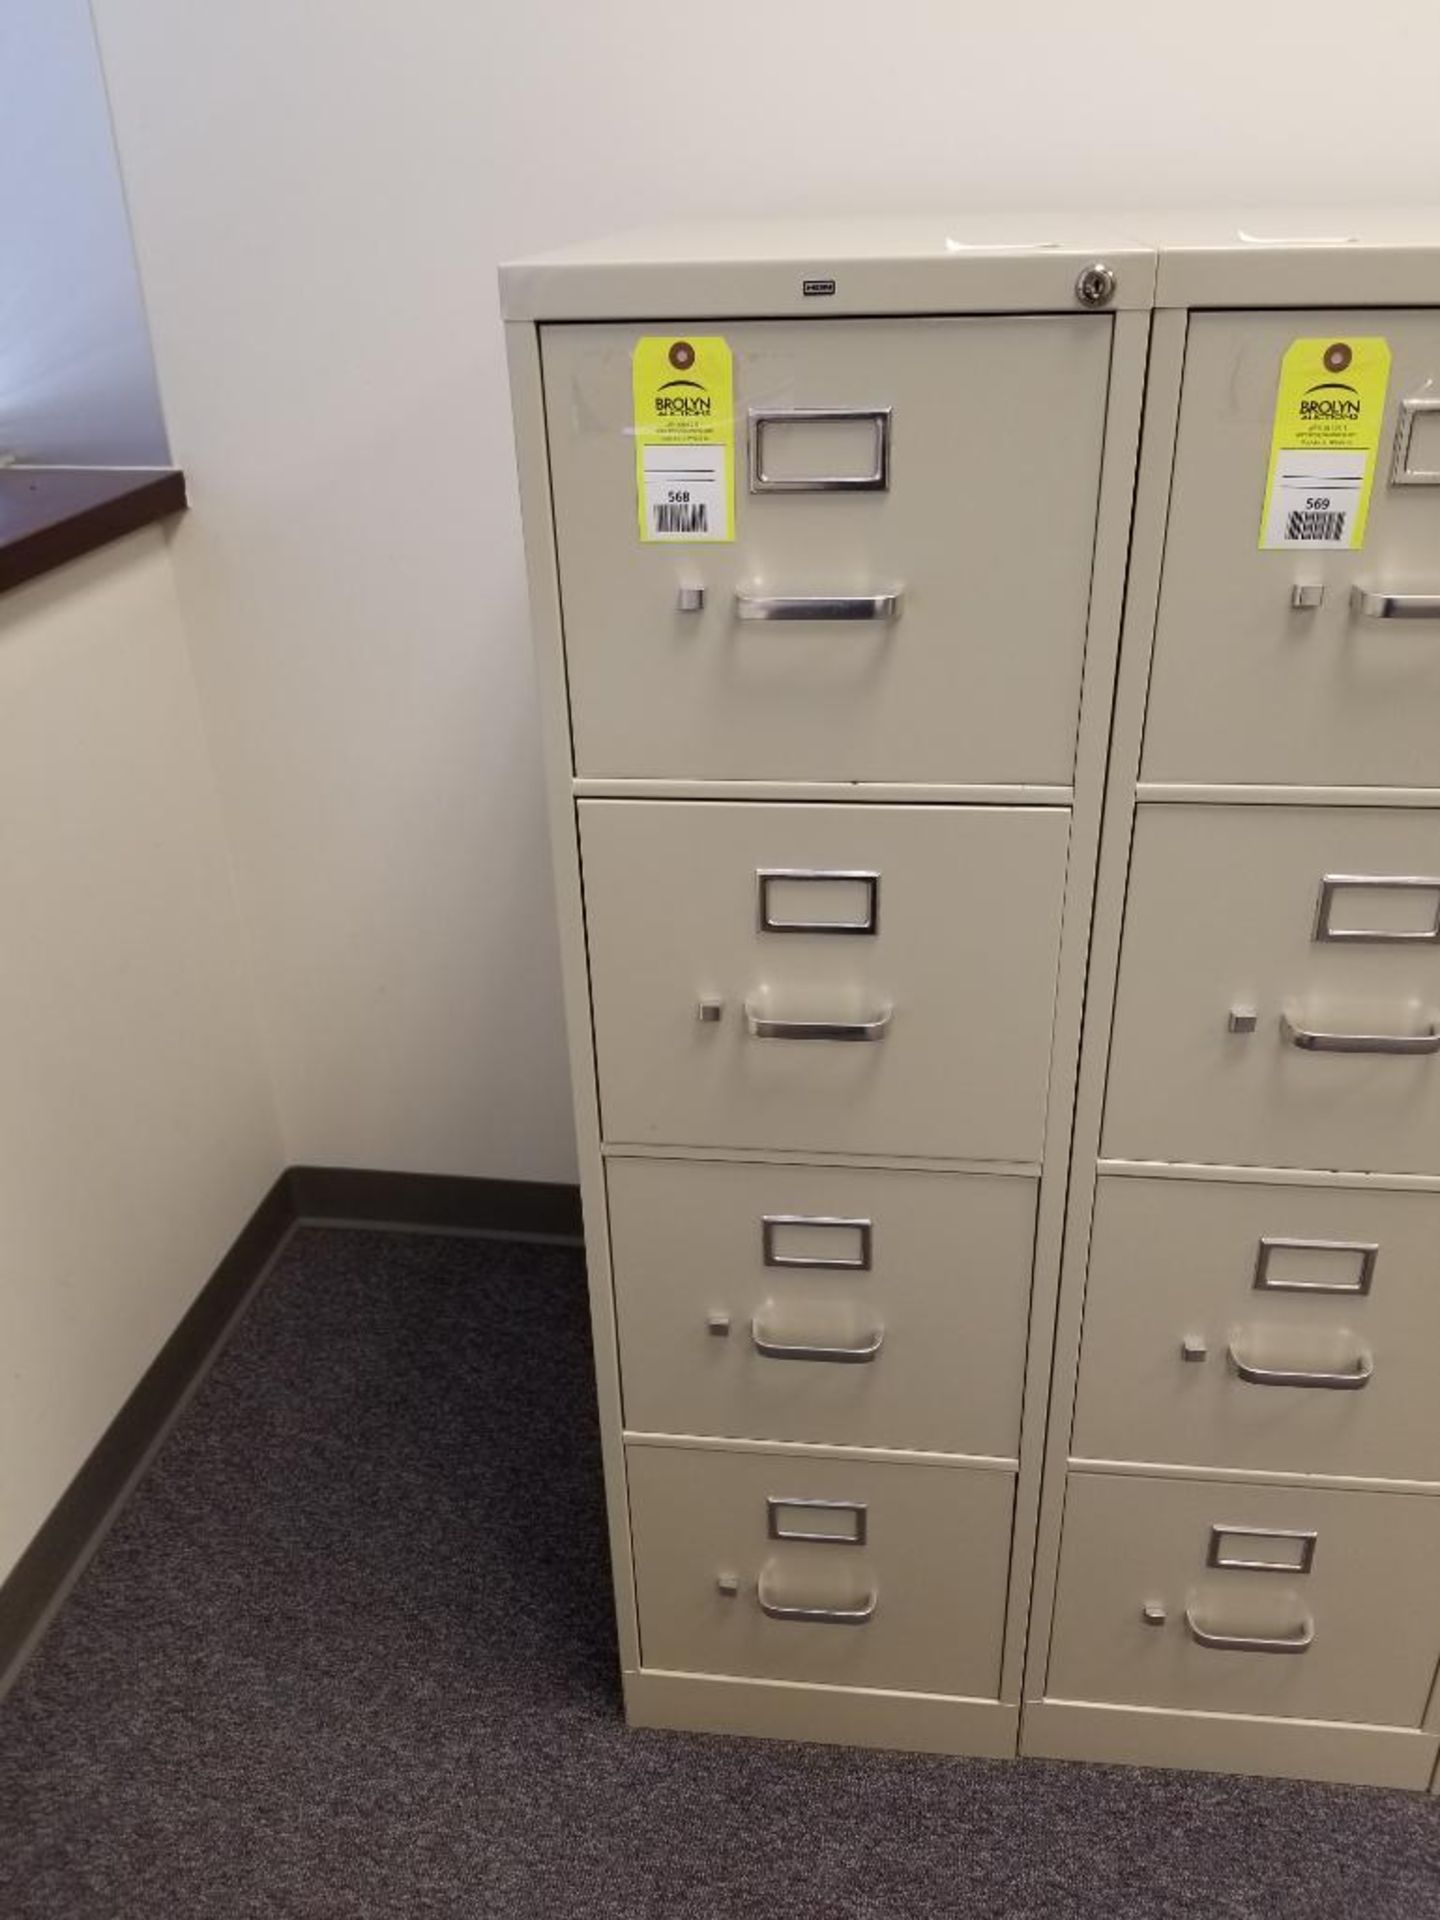 Qty 2 - Hon file cabinets. 52" tall x 15" wide x 25" deep.